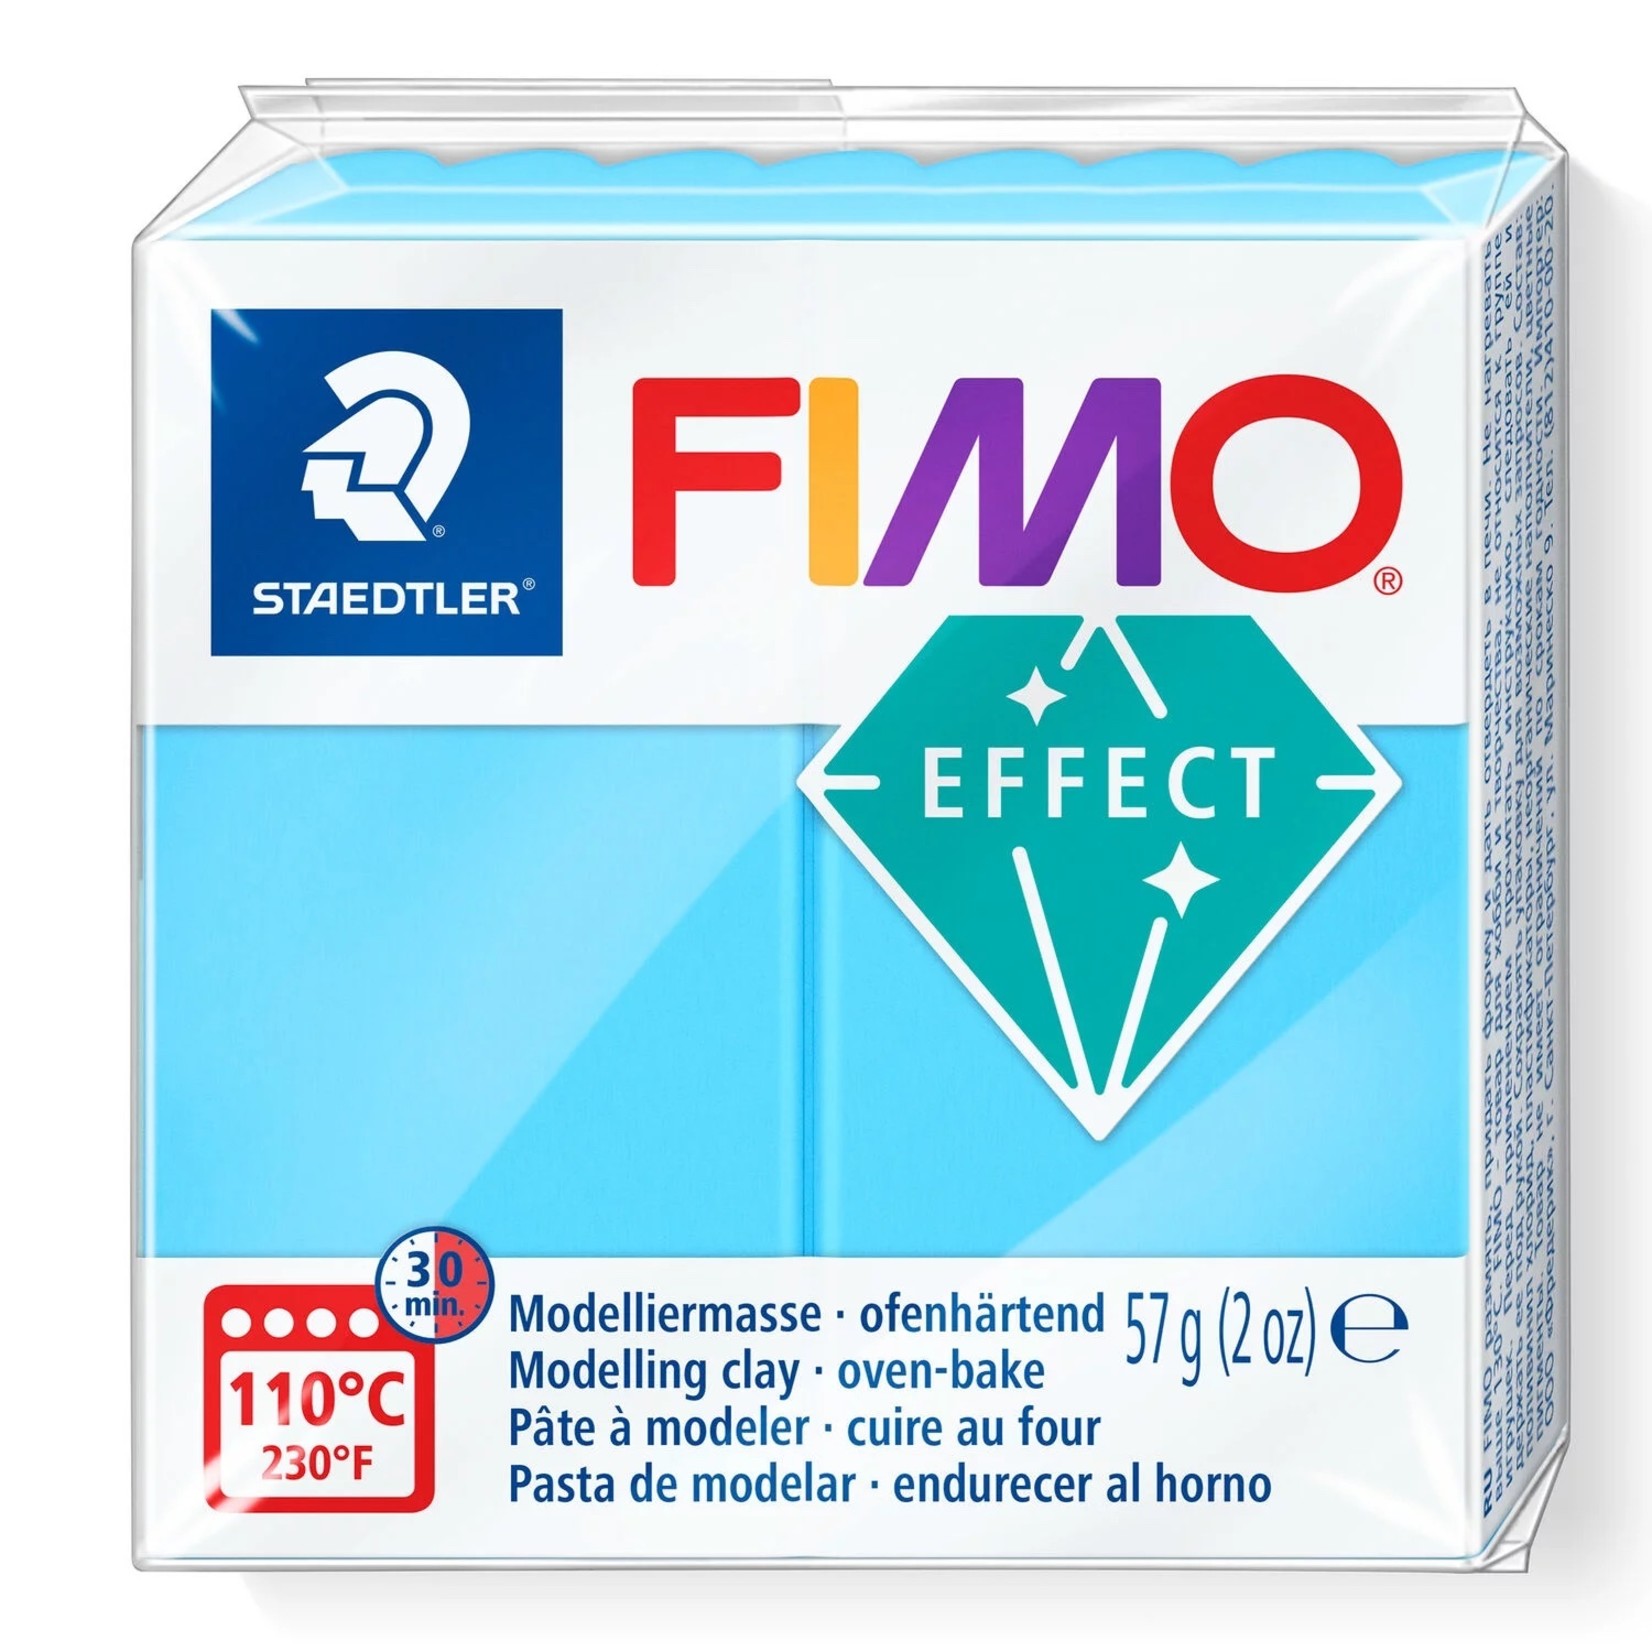 STAEDTLER FIMO EFFECT NEON 301 BLUE